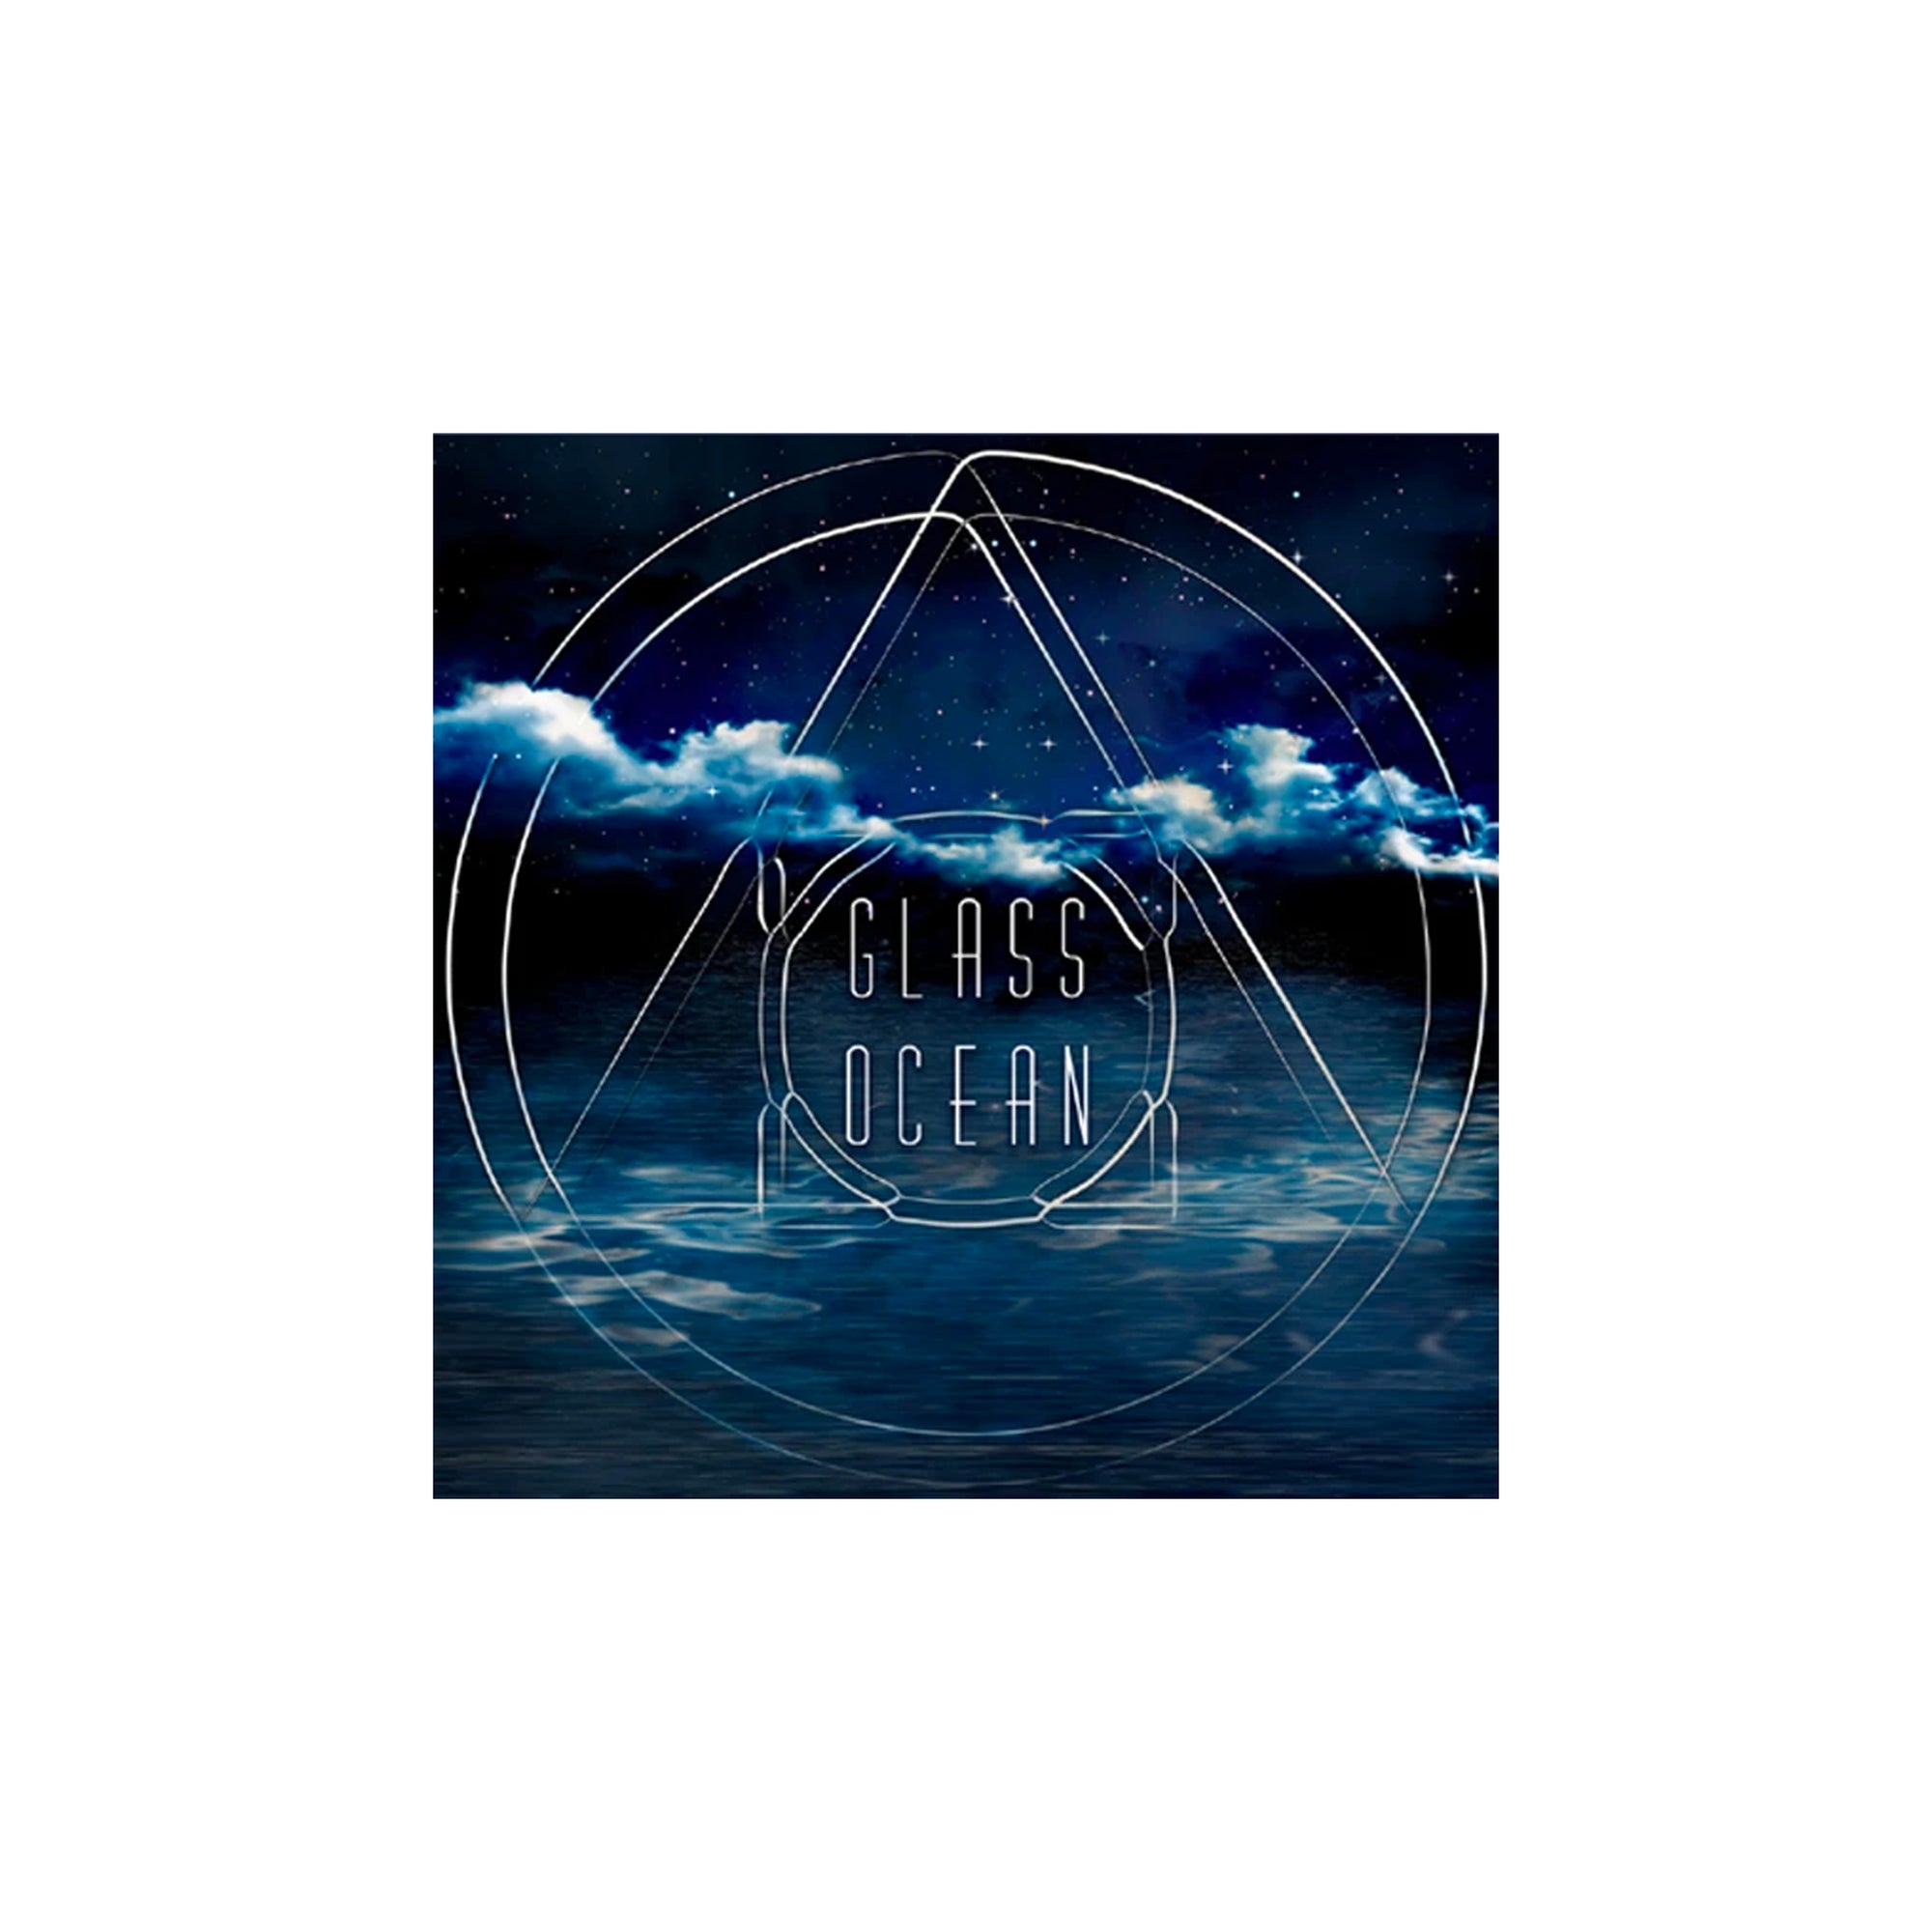 GLASS OCEAN // GLASS OCEAN - EP // DIGIPAK CD - Wild Thing Records